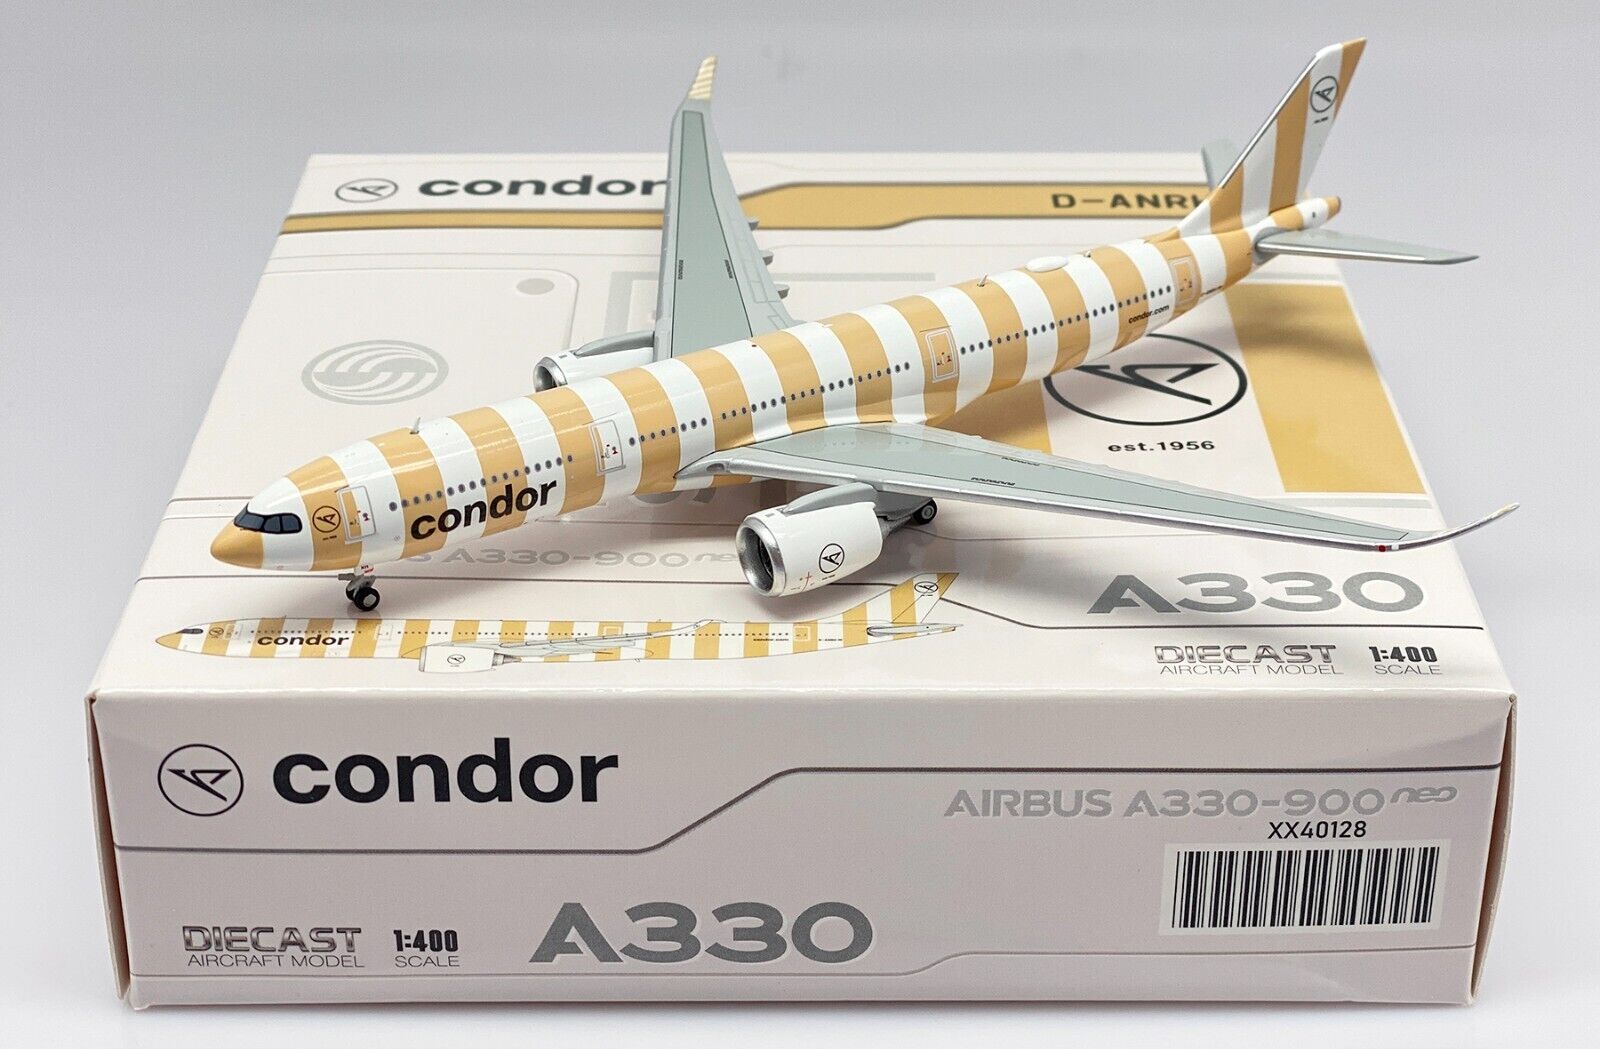 Condor A330-900neo Reg: D-ANRH Scale 1:400 JC Wings Diecast XX40128 (E)